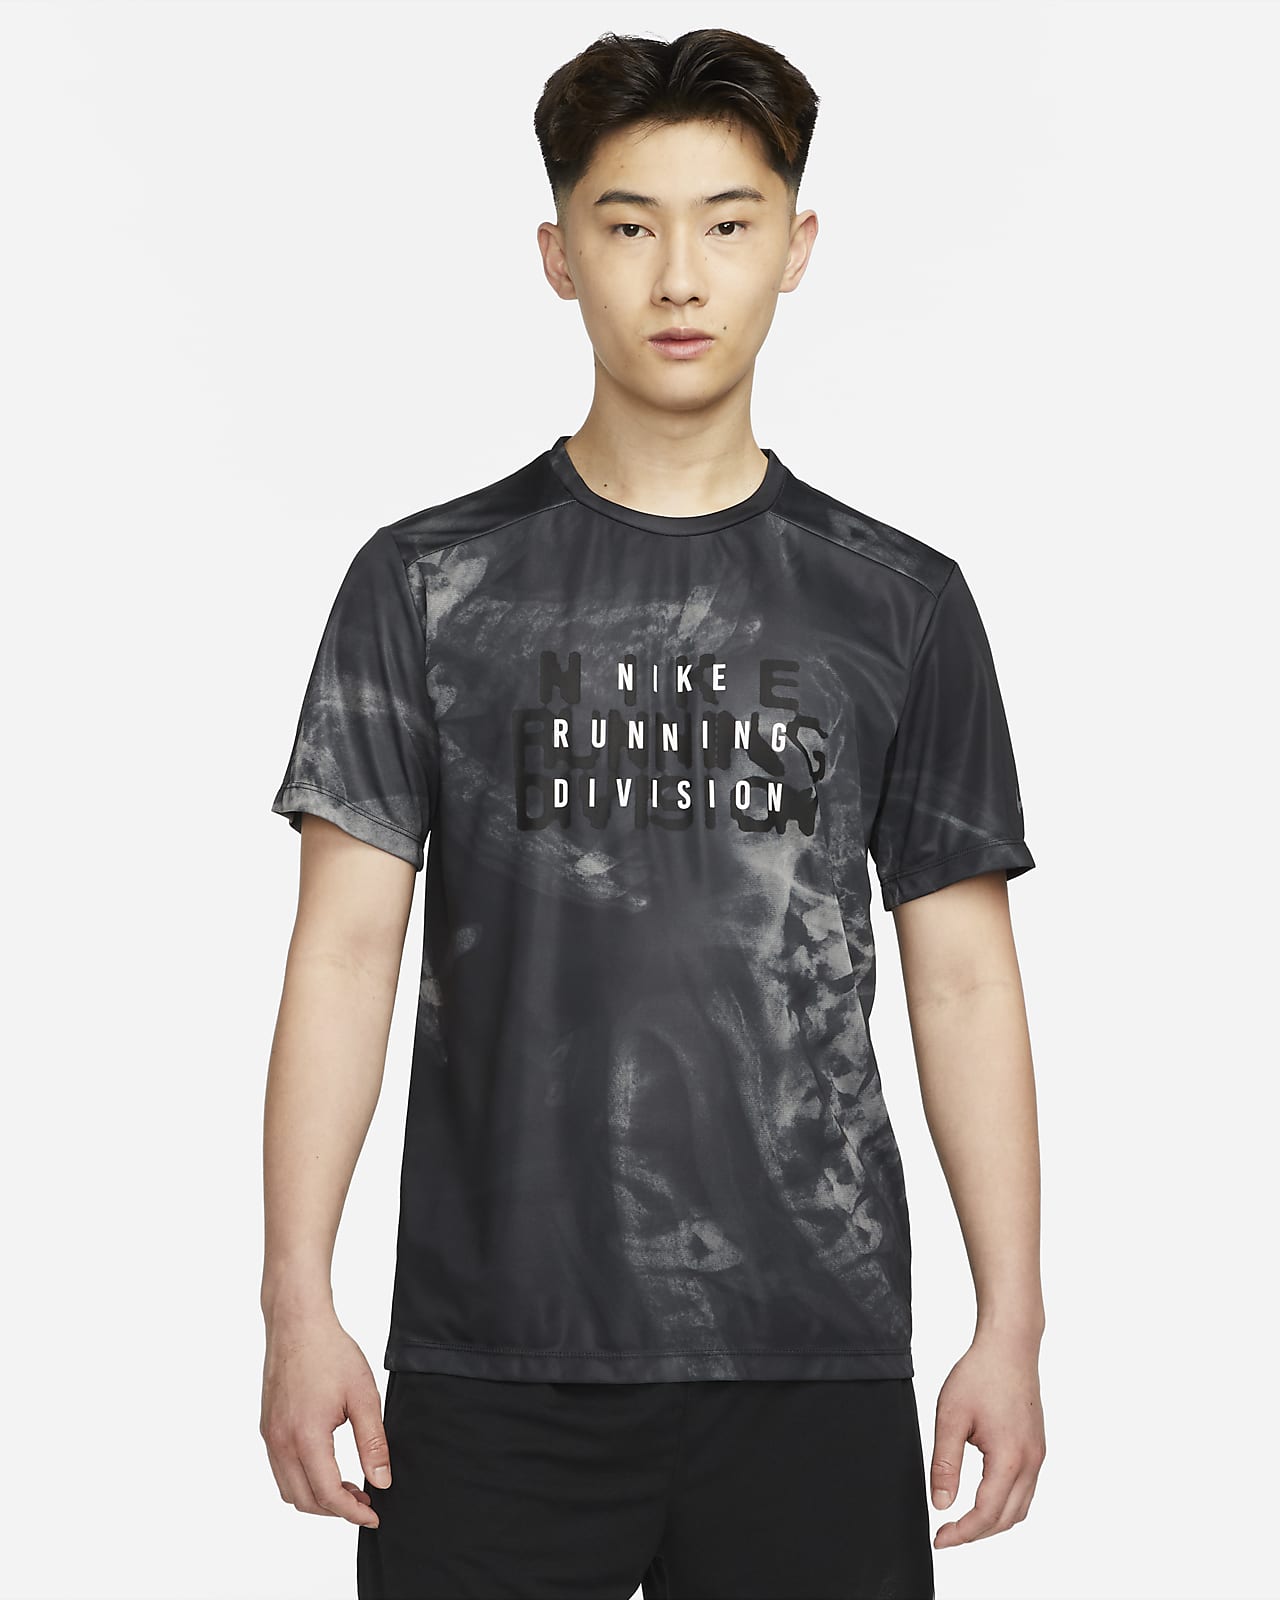 Nike Dri Fit Run Division Short Sleeve T-Shirt Black